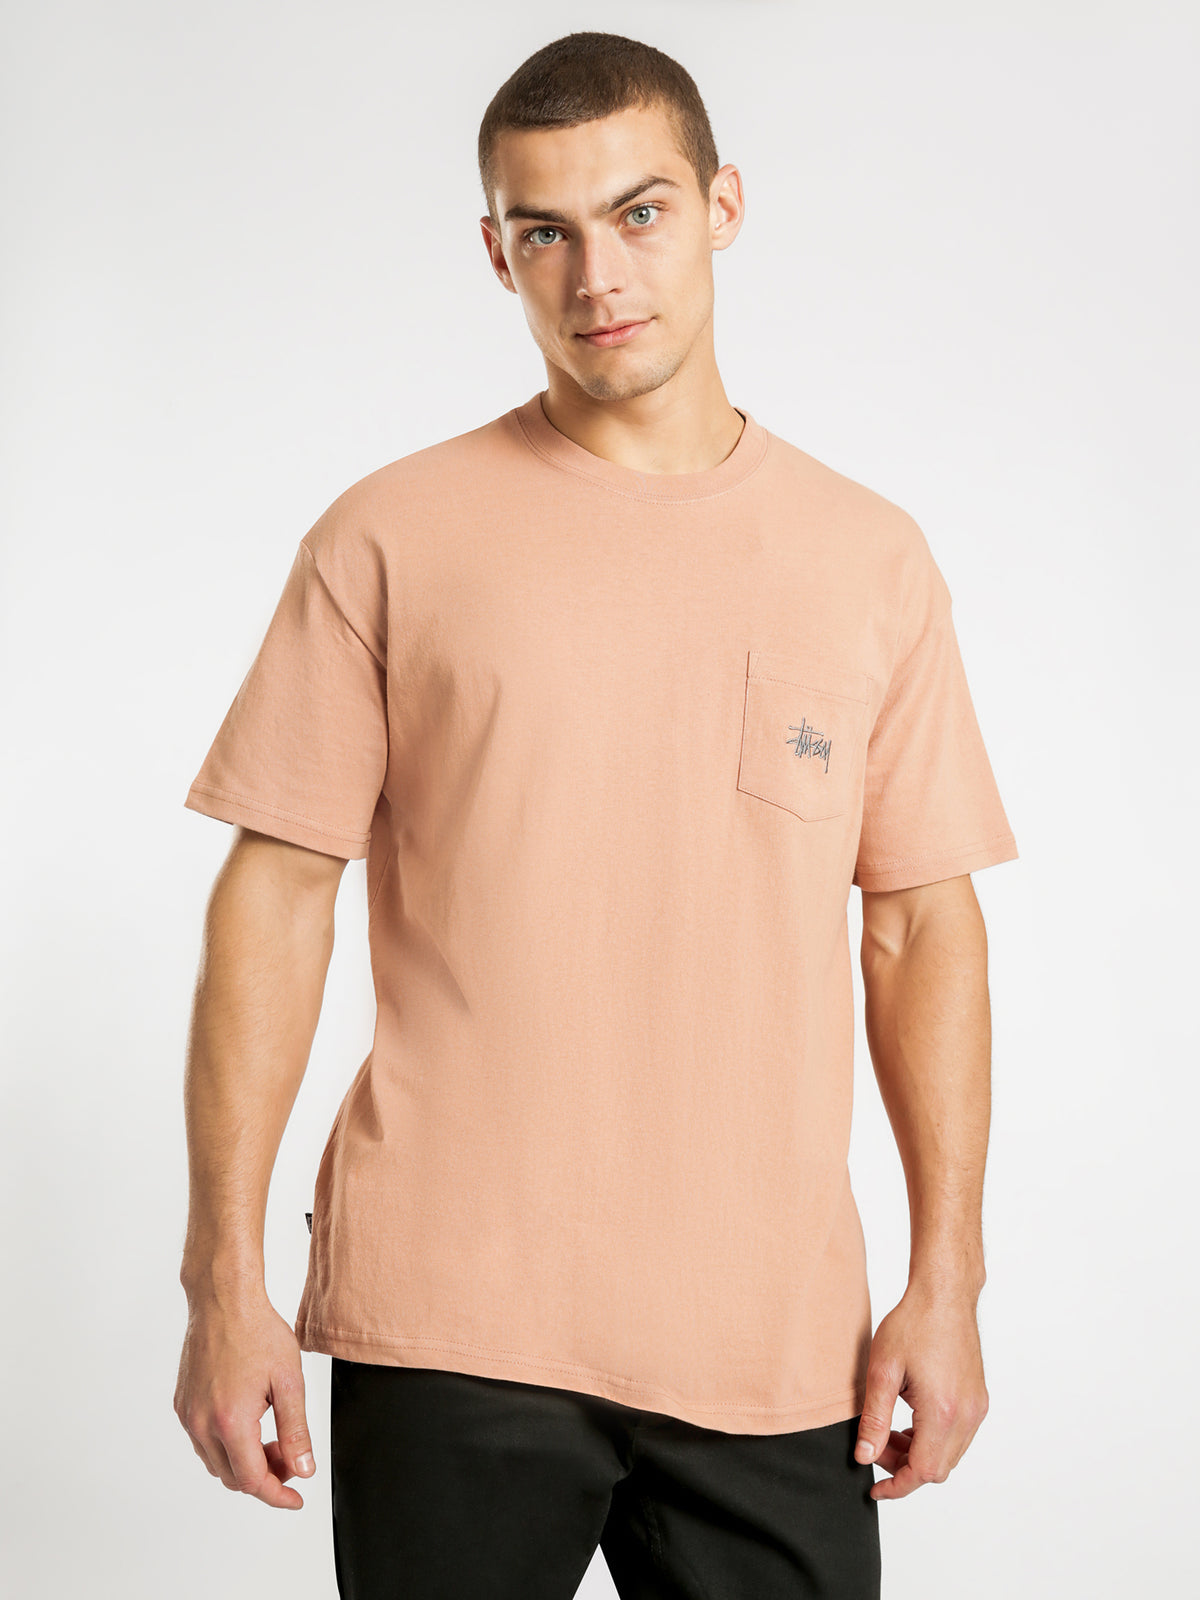 Graffiti Pocket Short Sleeve T-Shirt in Coral